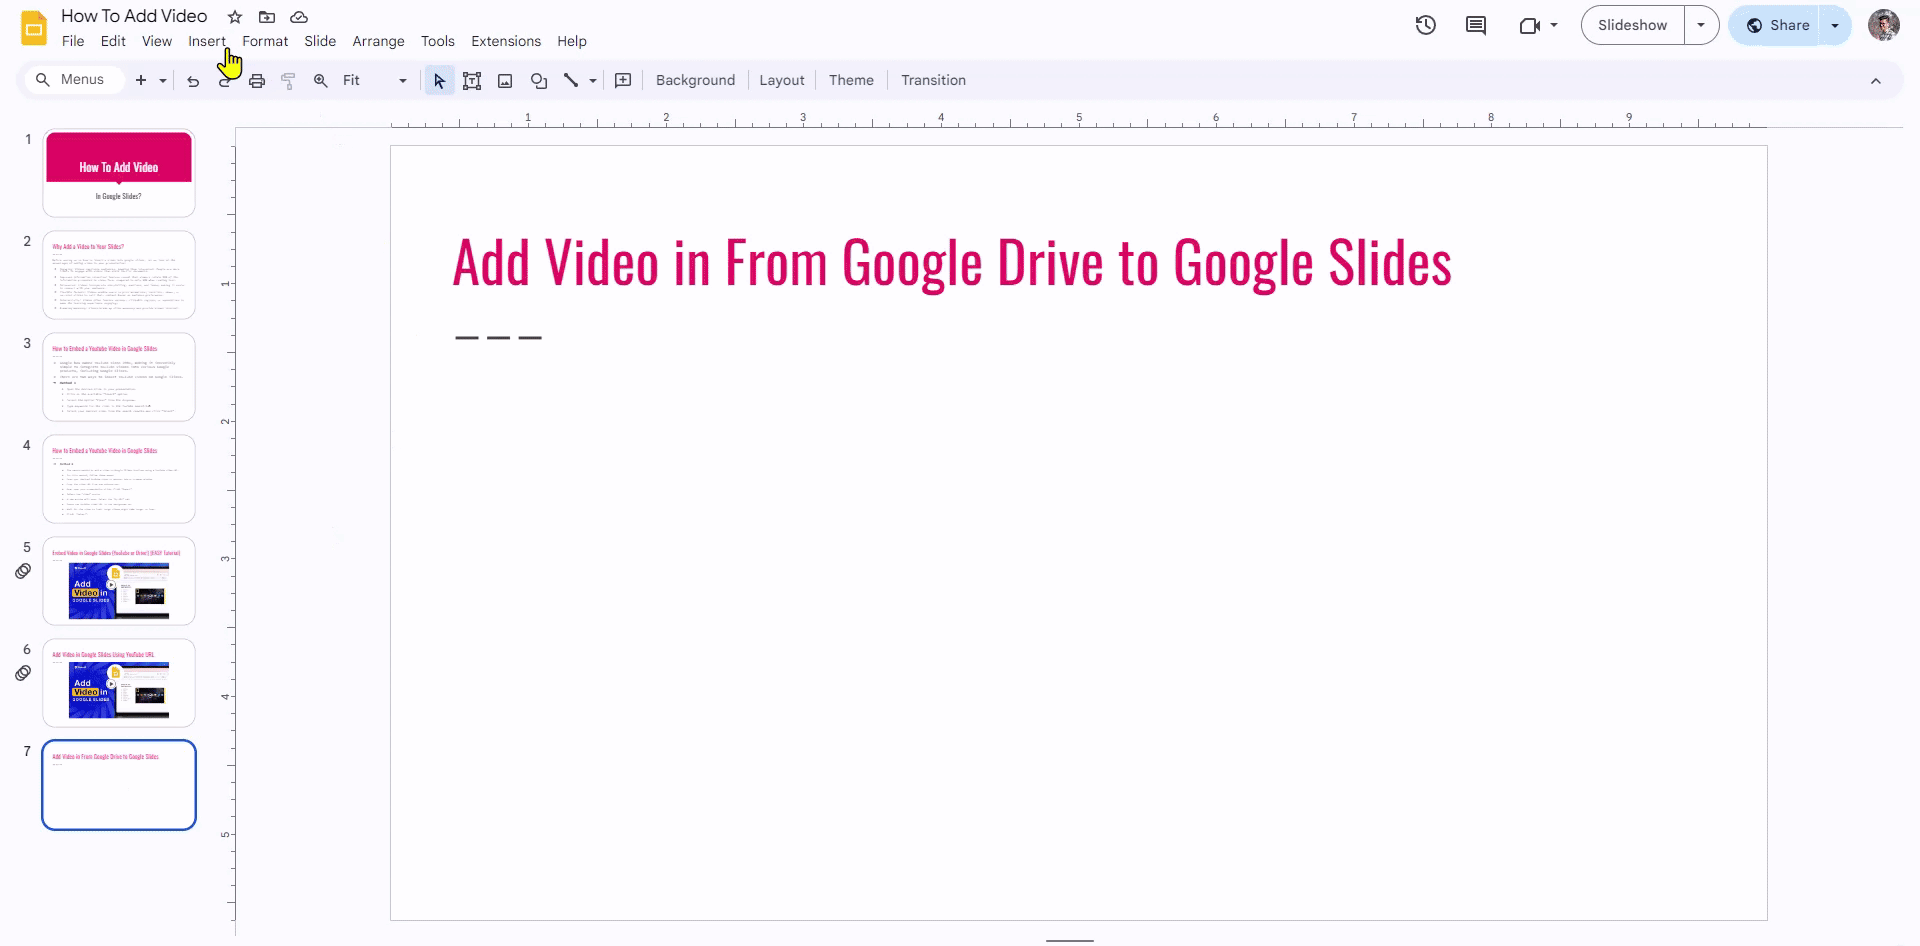 add video in google slides through google drive